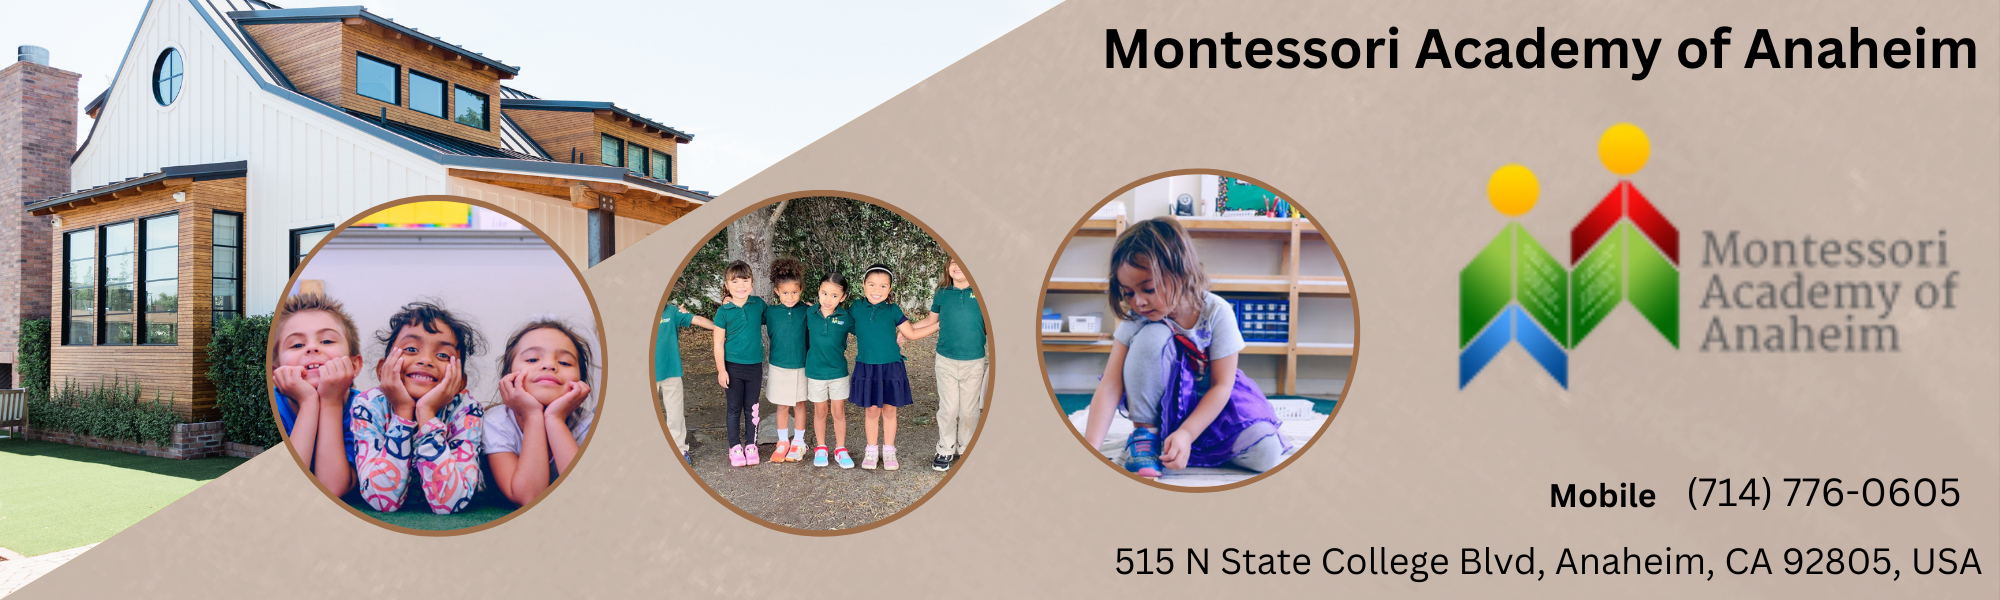 Montessori Academy Cover Image